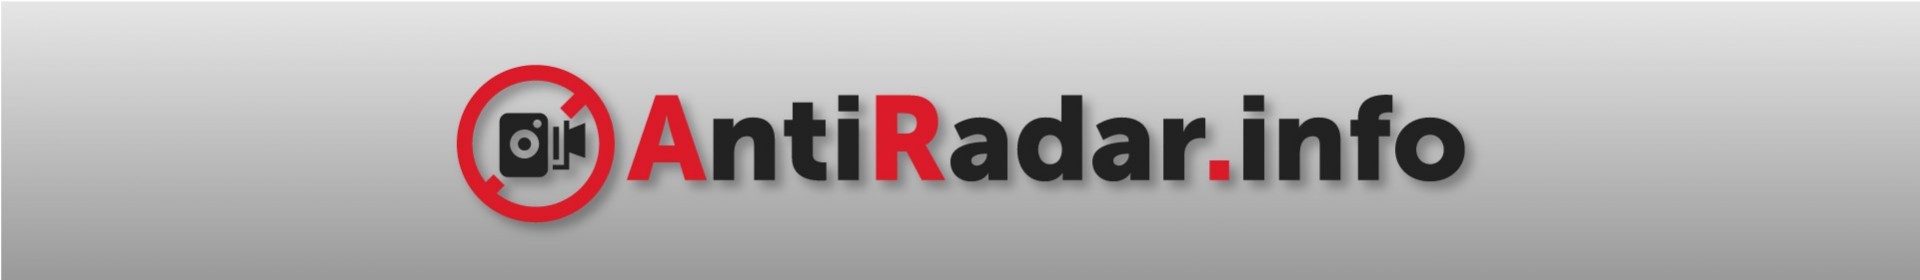 AntiRadar logo